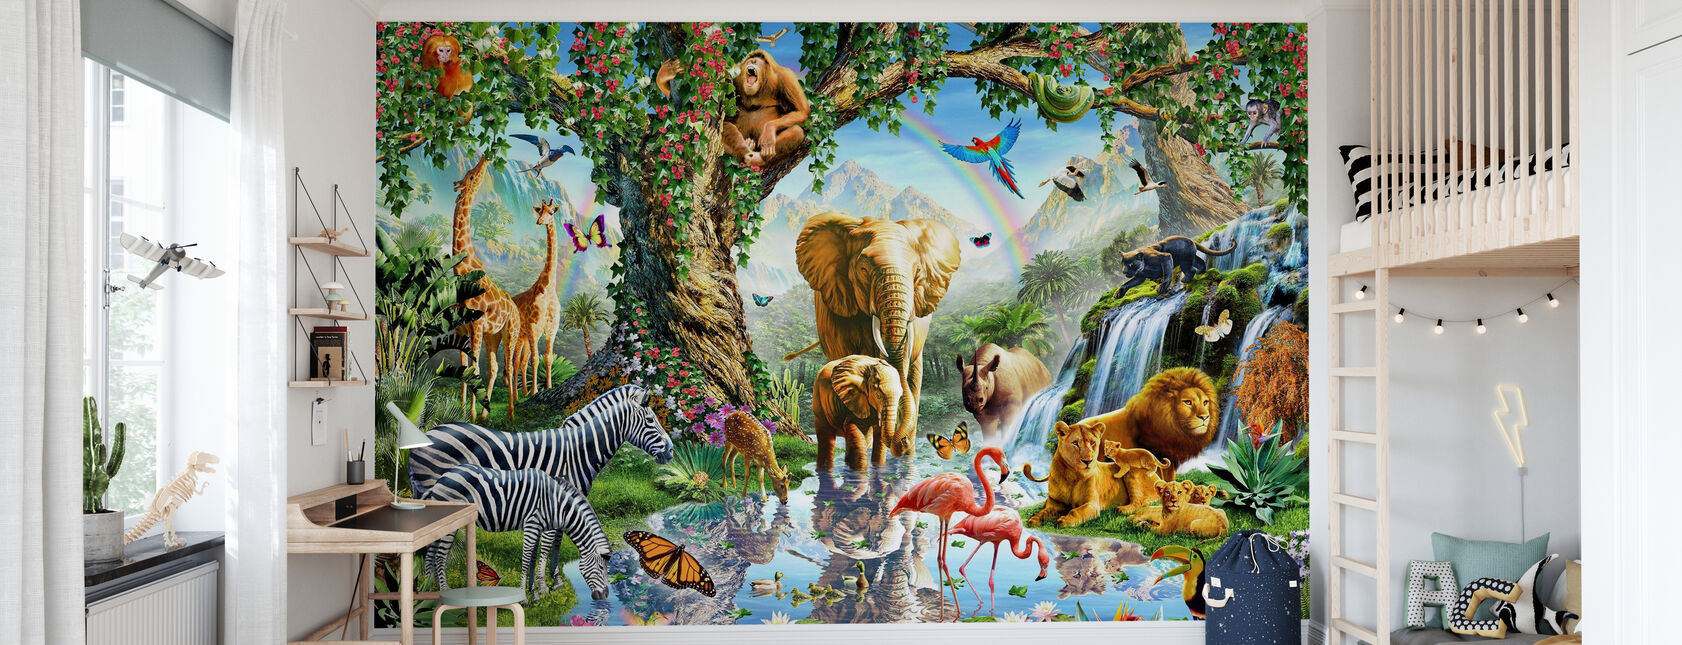 Jungle Lake with wild Animals - Wallpaper - Kids Room